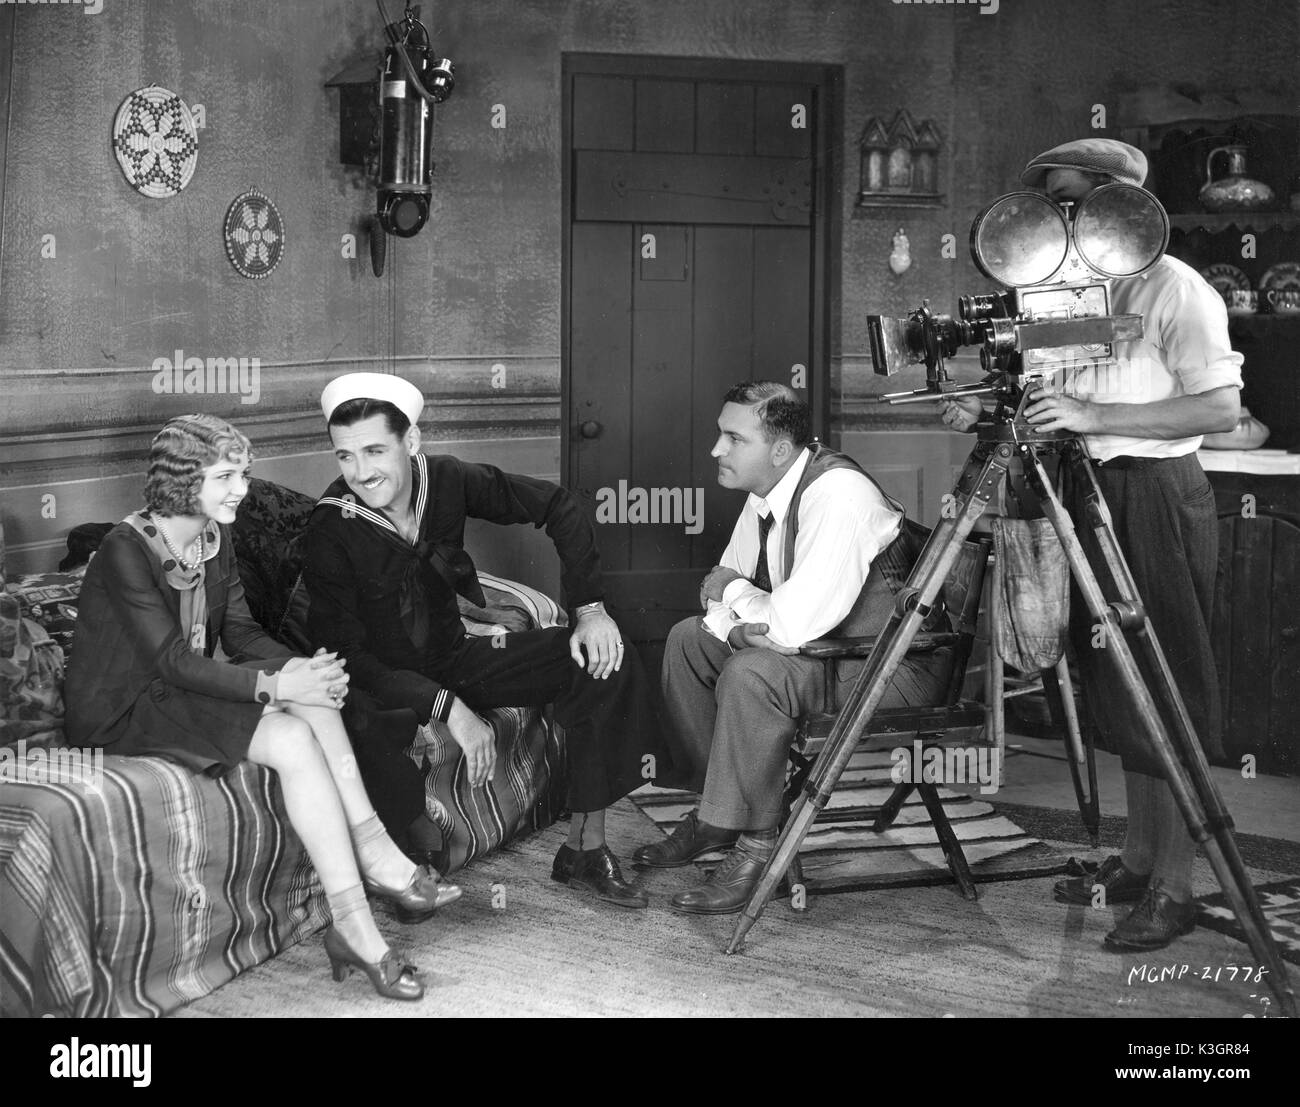 UNDENTIFIED 1920s INDUSTRIA CINEMATOGRAFICA SHOT Foto Stock